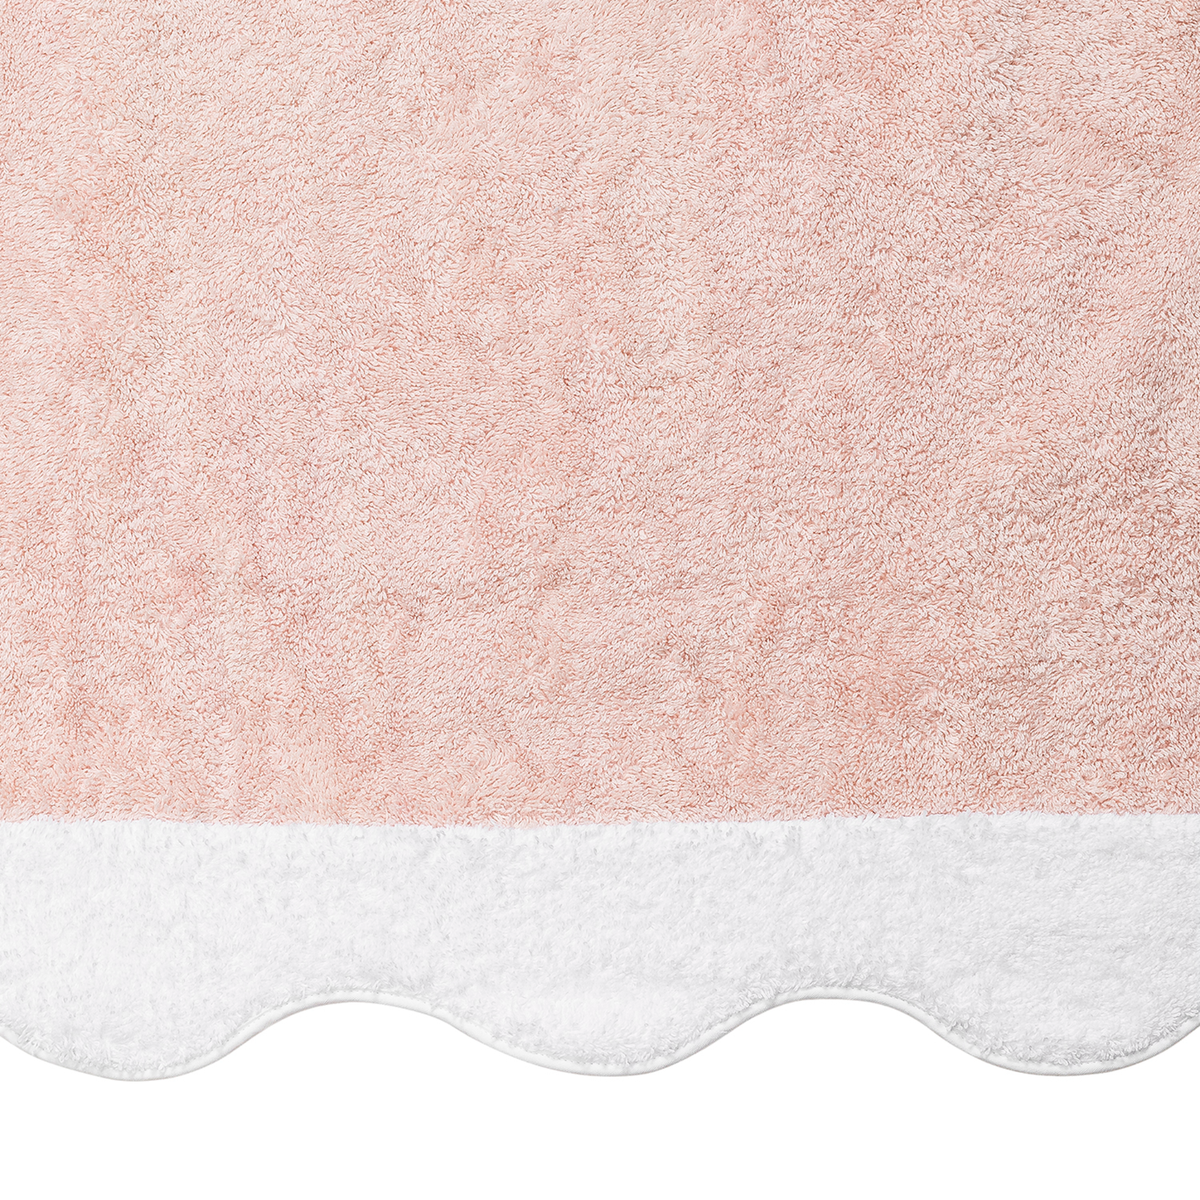 Fabric Closeup of Matouk Neptune Beach Towels in Blush/White Color